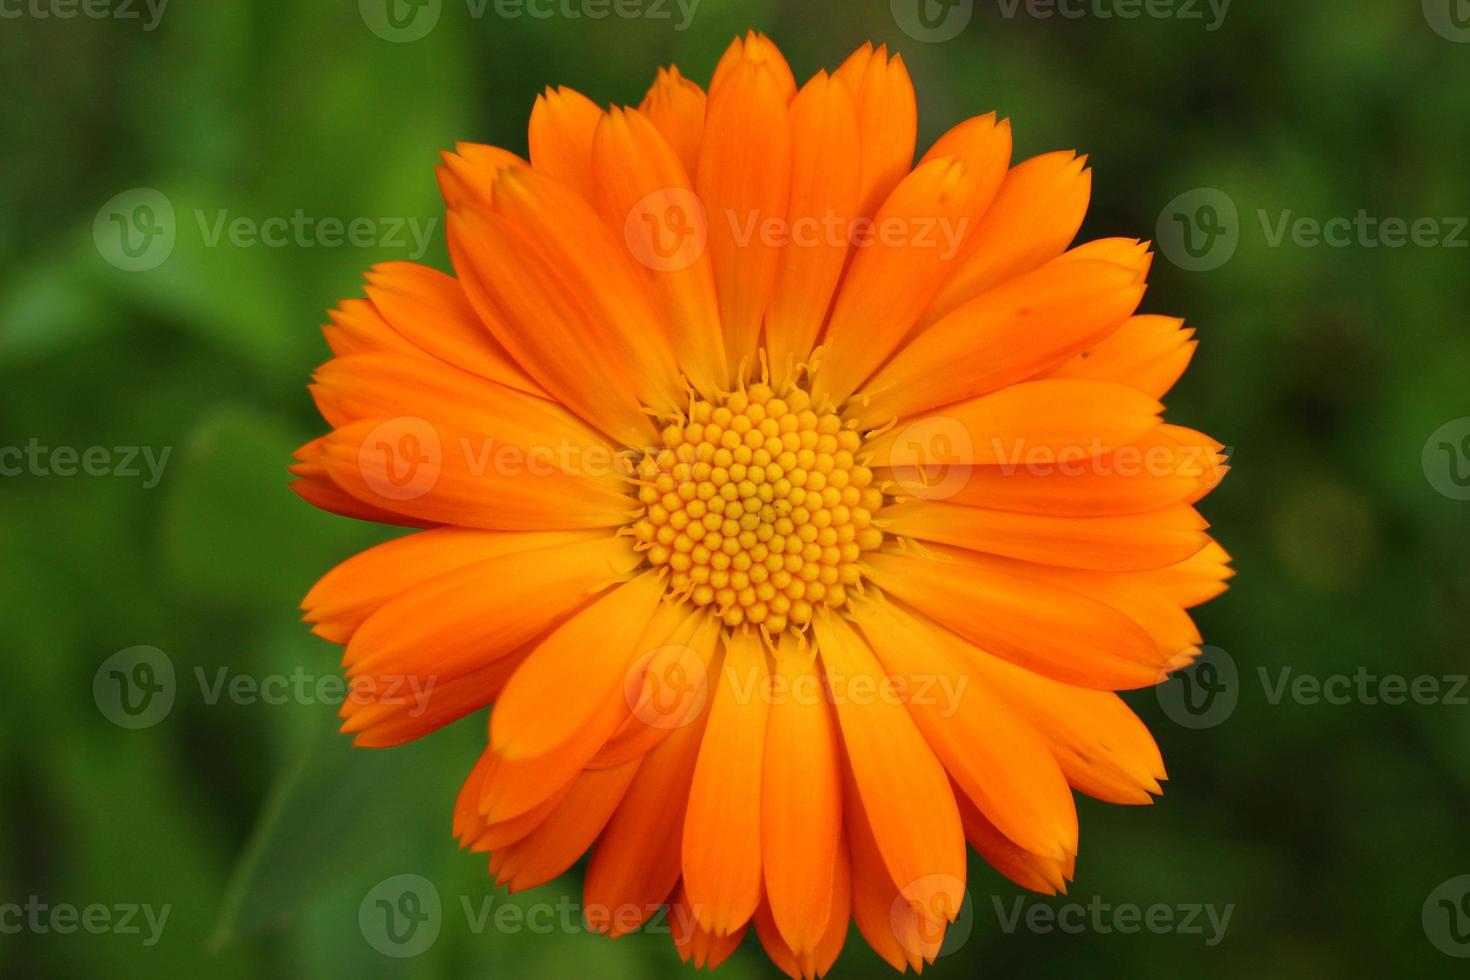 oranje calendula bloem close-up foto